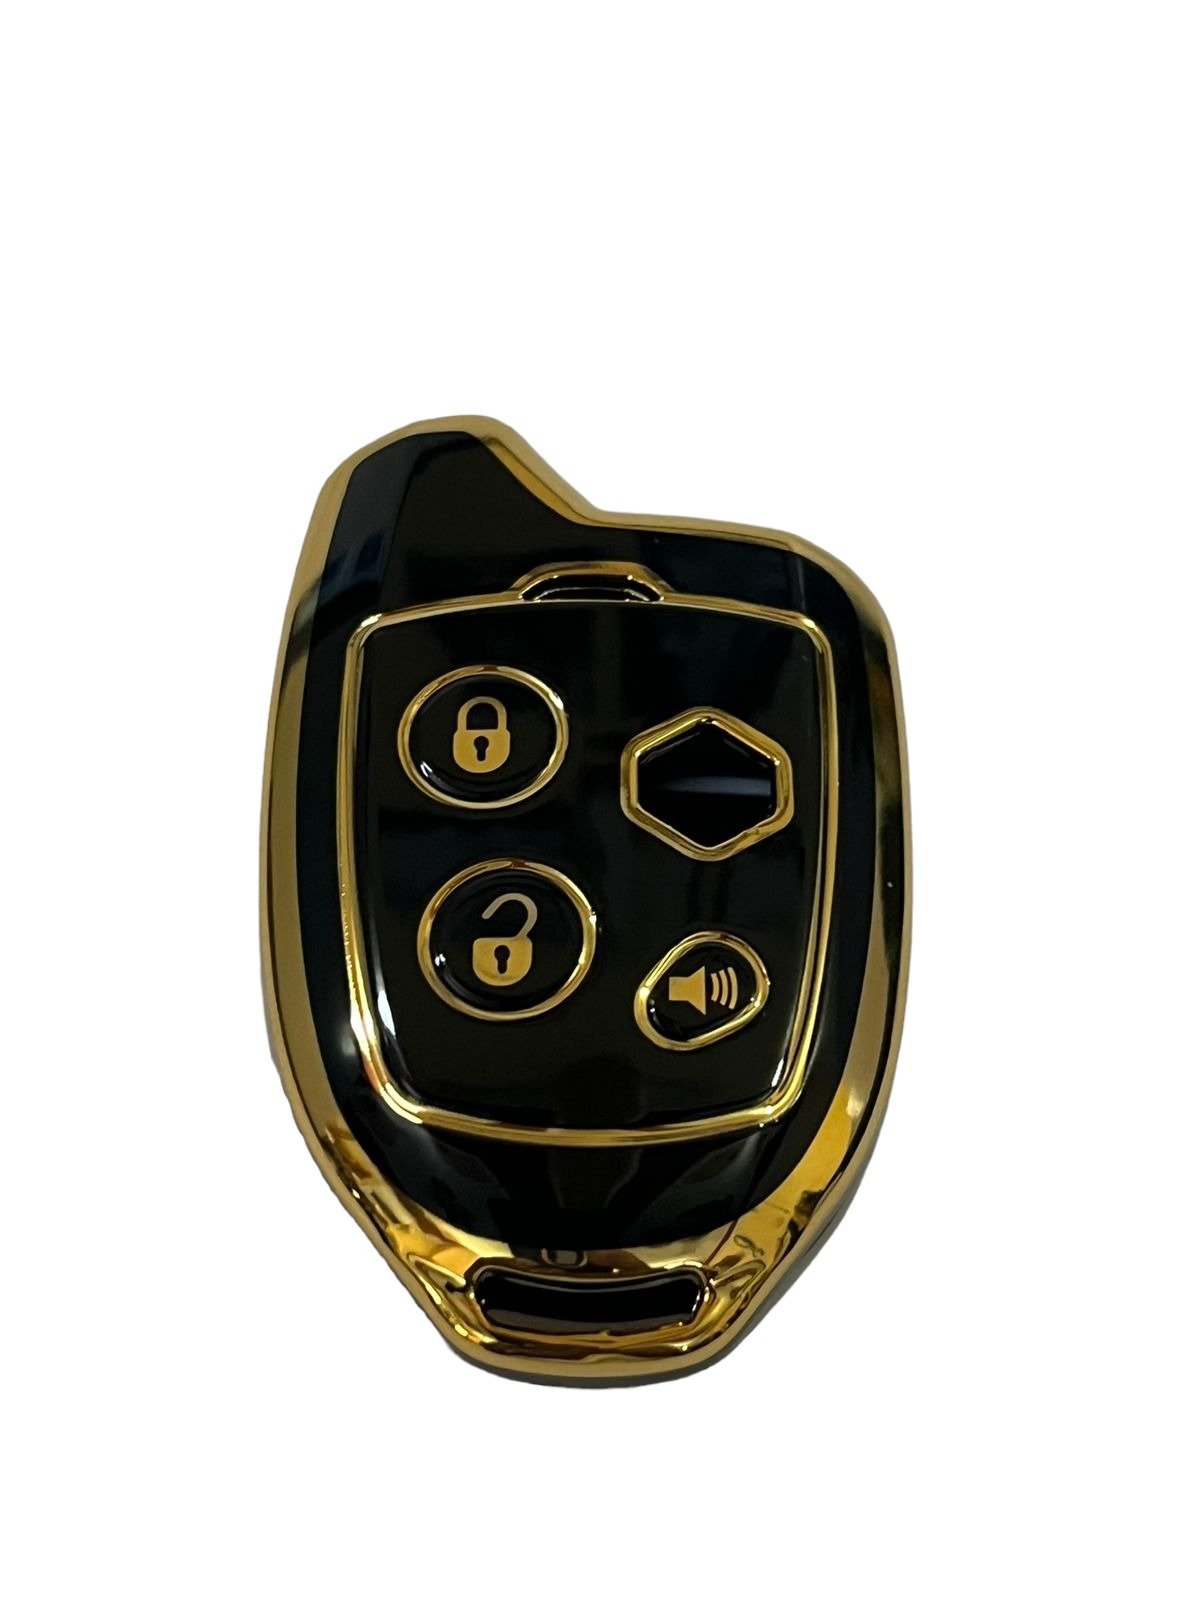 TPU Key Cover Compatible For Swift,Dzire Ritz WagonR S-Cross, Ertiga, Astar, Ciaz, Celerio, WagonR, Baleno, Scross, Vitara Brezza, Baleno BS6 2020 with Nippon Remote (Gold/Black) Image 